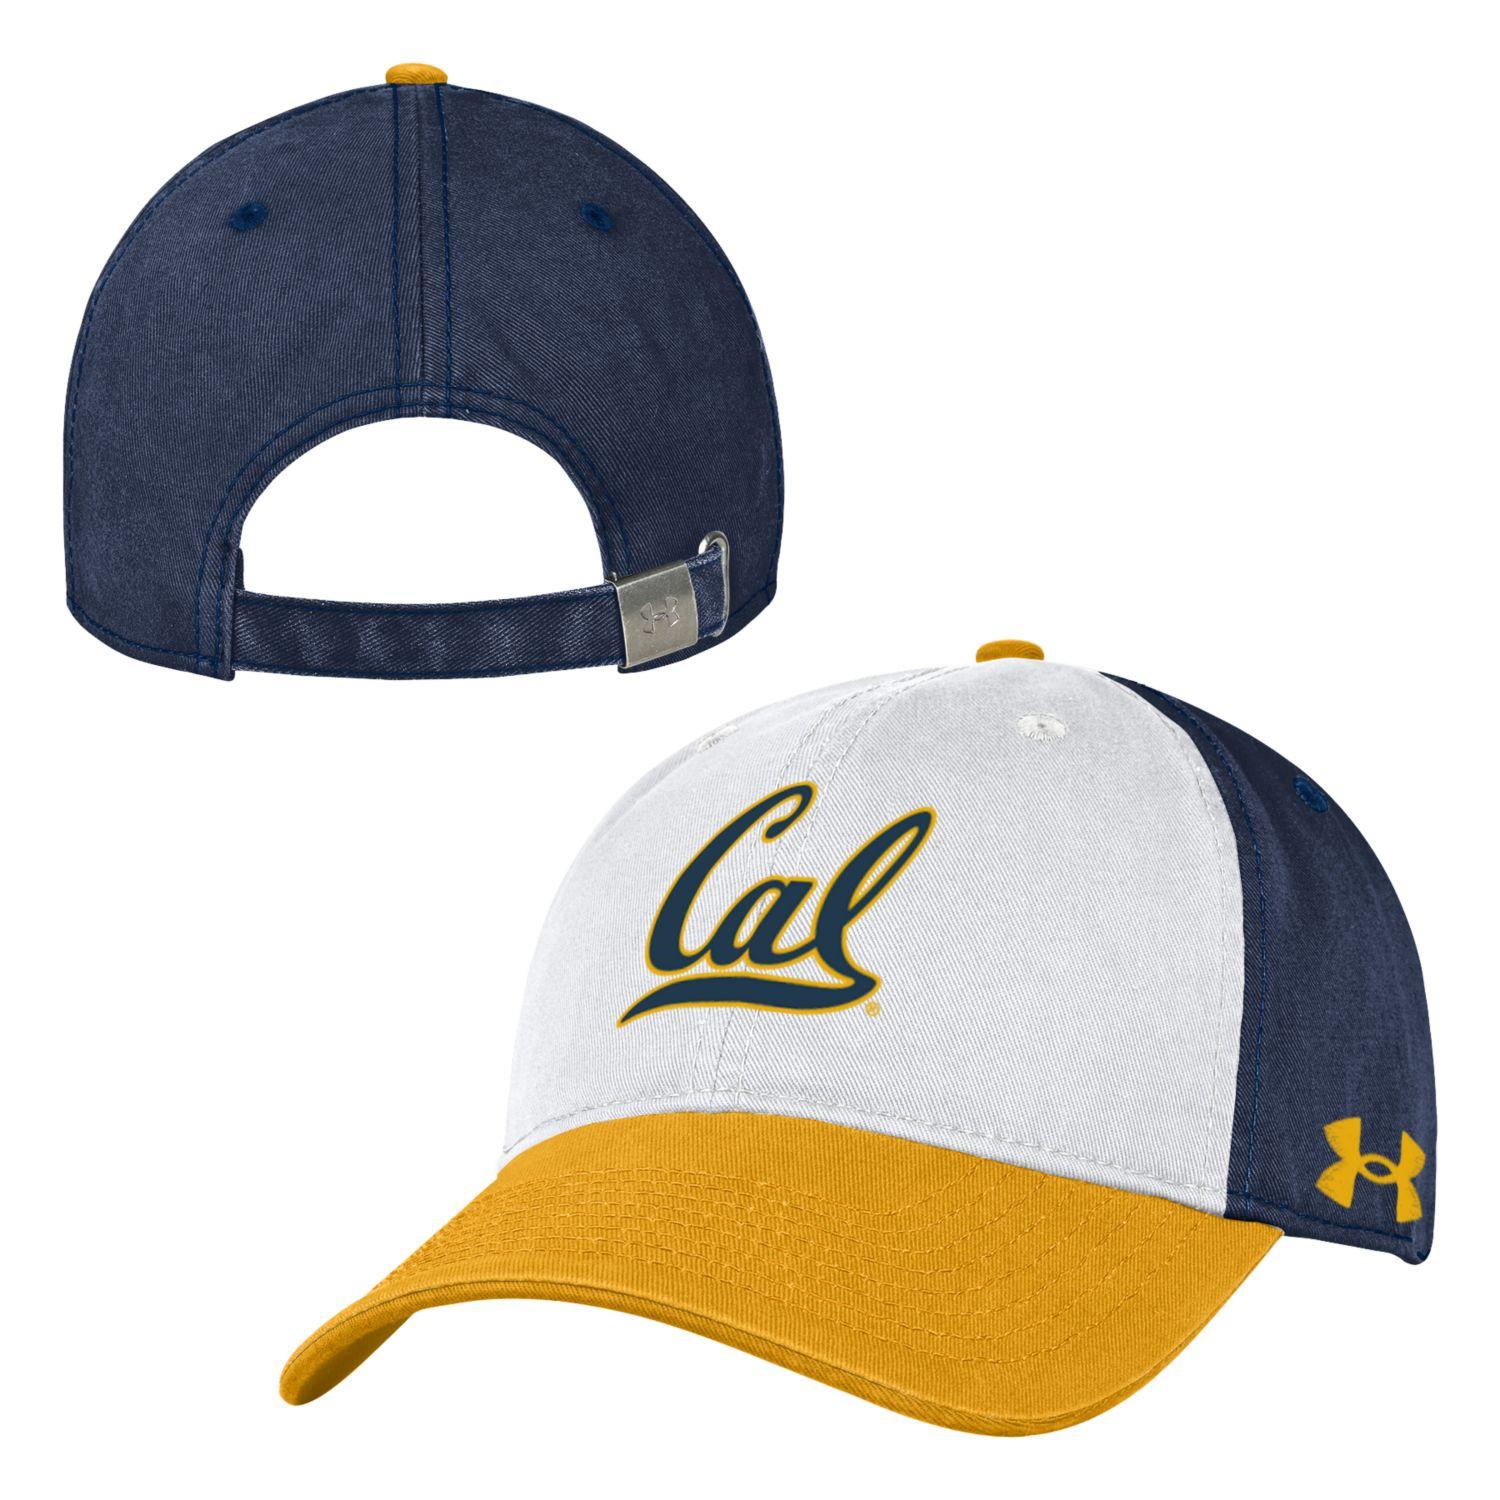 U.C. Berkeley Cal Embroidered Under Armour Coolor Block Hat in Navy Blue | Men's